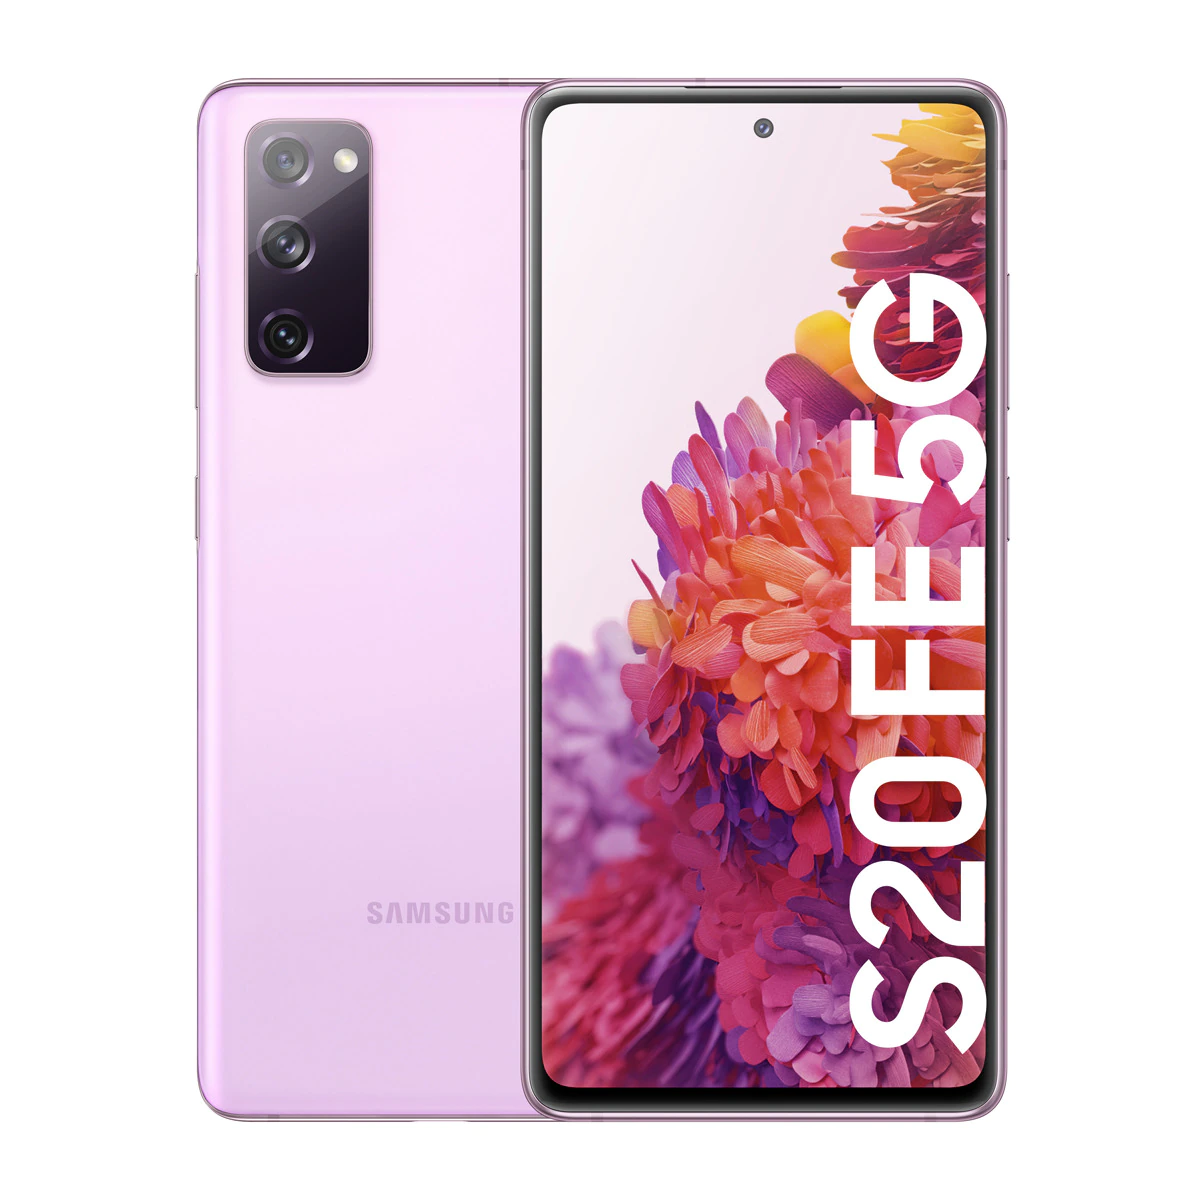 Samsung Galaxy S20 FE 5G 8 GB + 256 GB violeta móvil libre